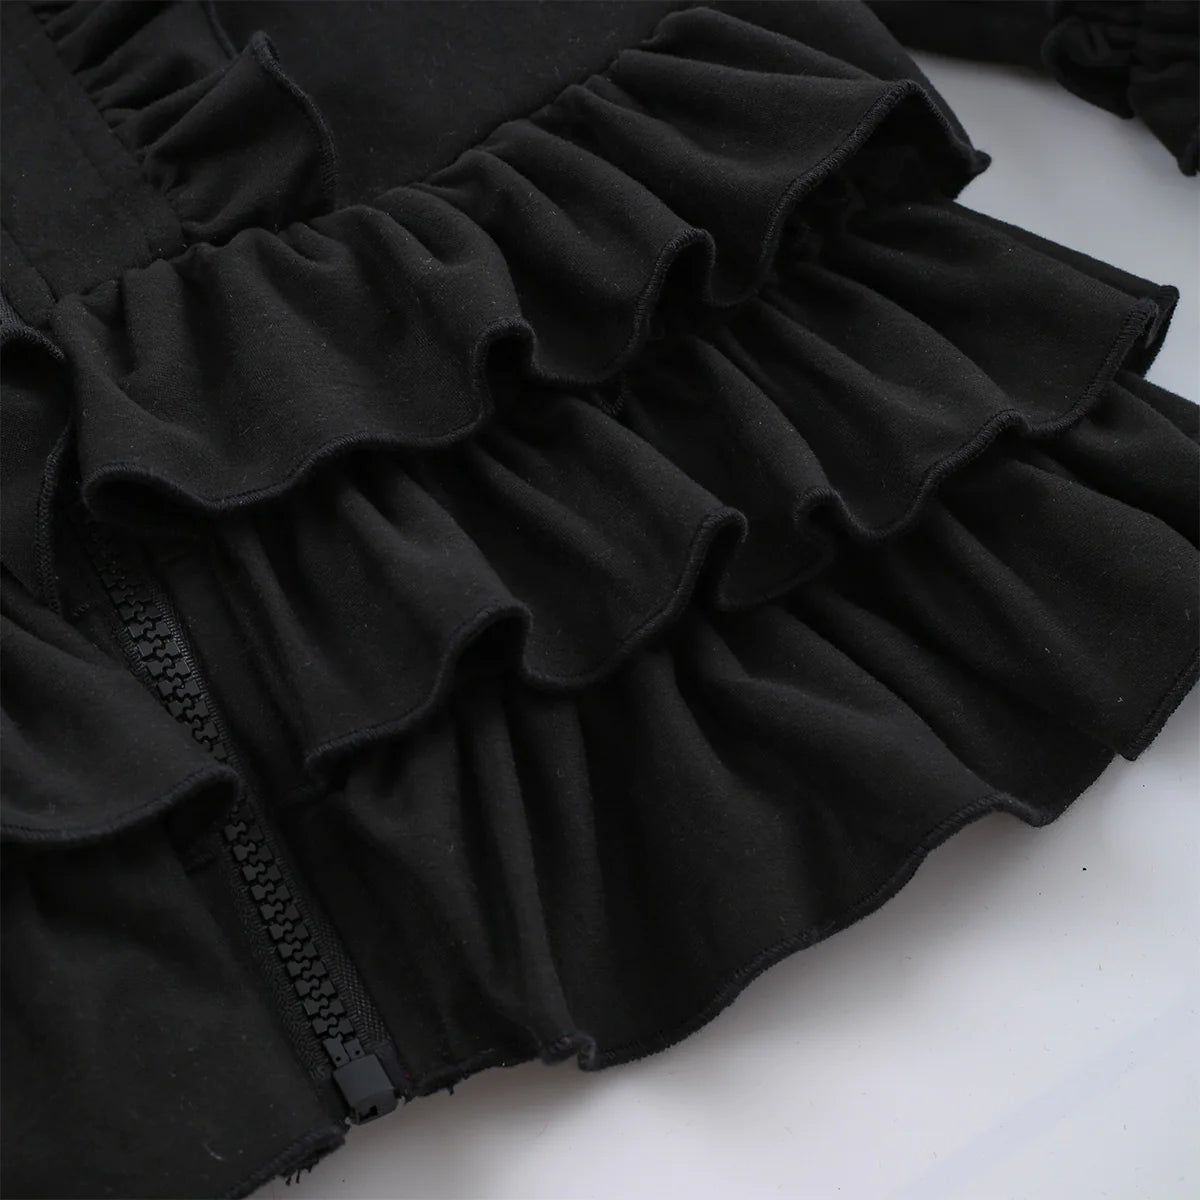 Black Ruffle Jacket by Okie & Lou